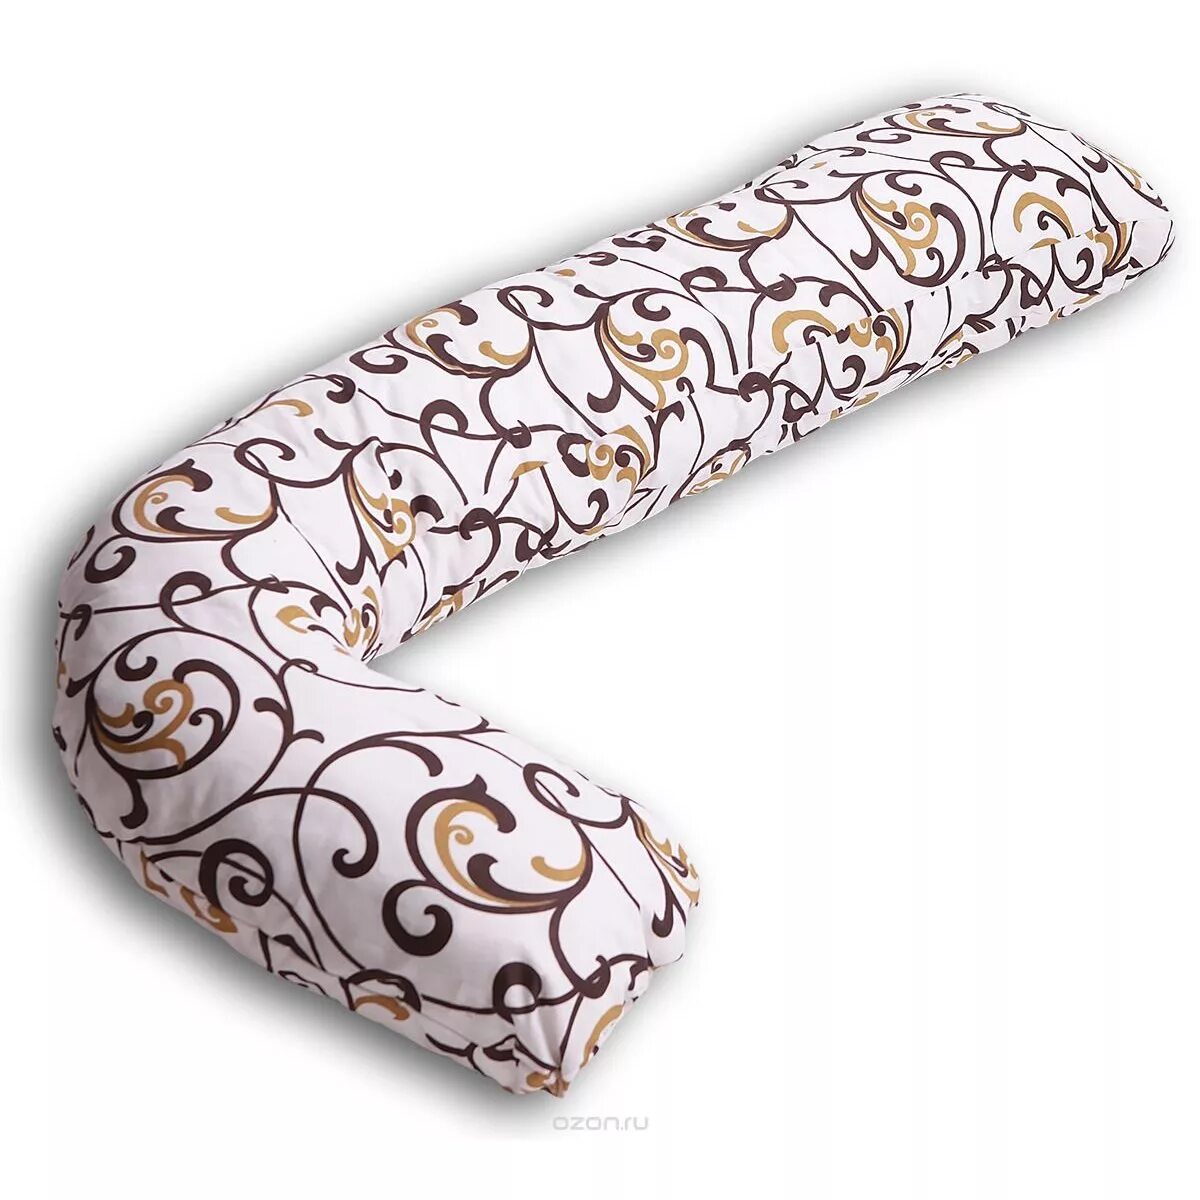 Body Pillow подушка для беременных. Подушка body Pillow i пенополистирол. Подушка body Pillow для беременных l холлофайбер. Подушка для беременных l образная.